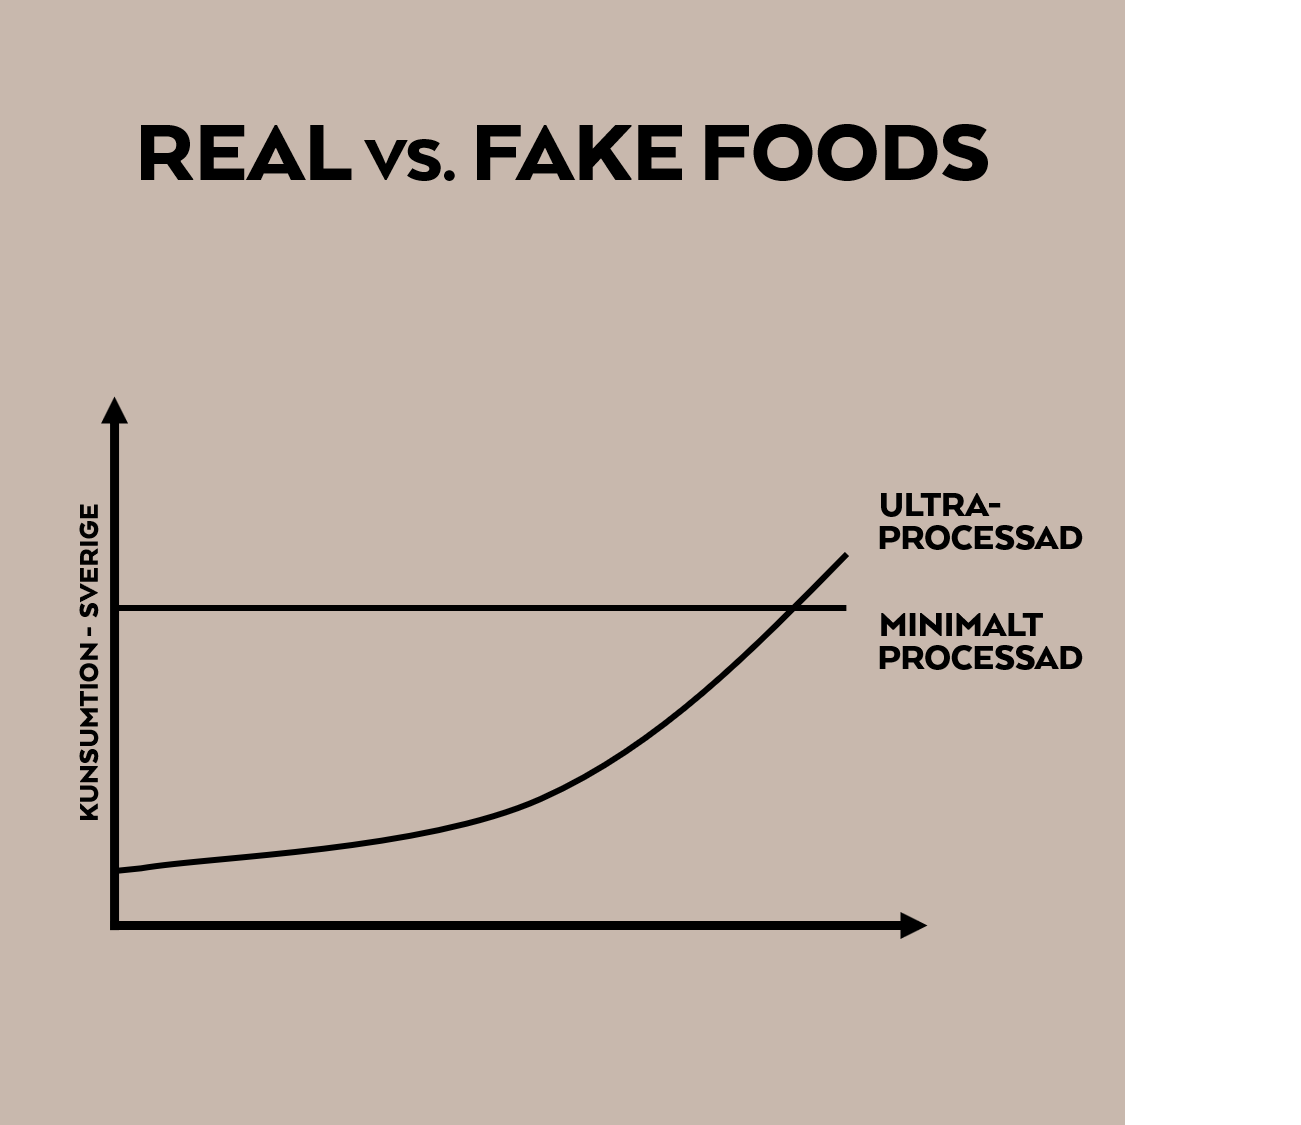 Real vs Fake foods